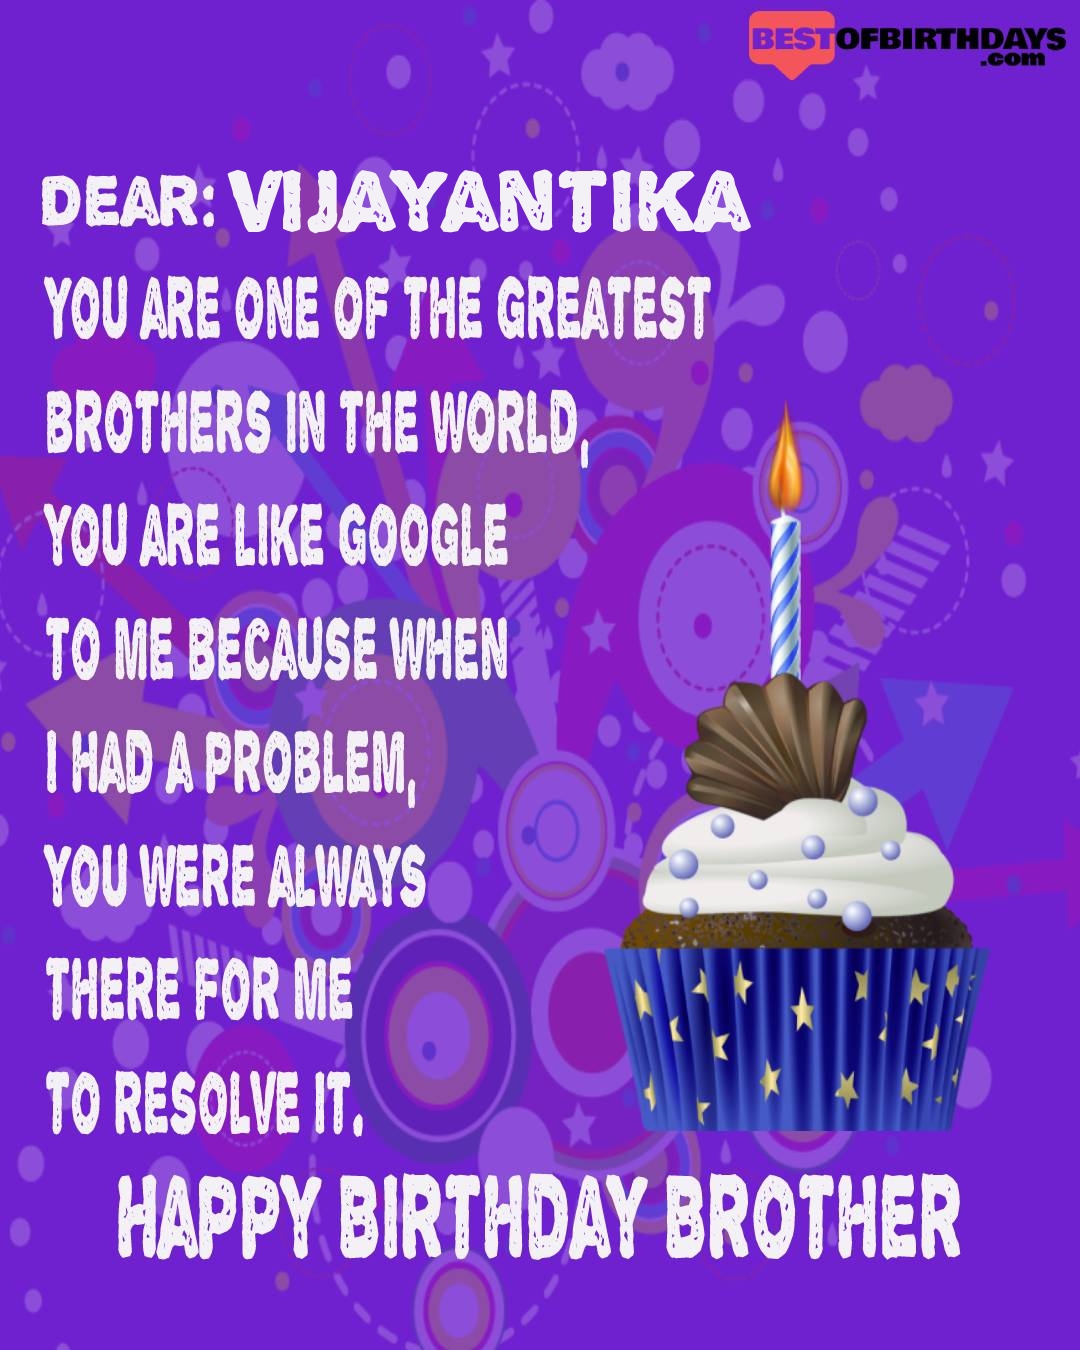 Happy birthday vijayantika bhai brother bro